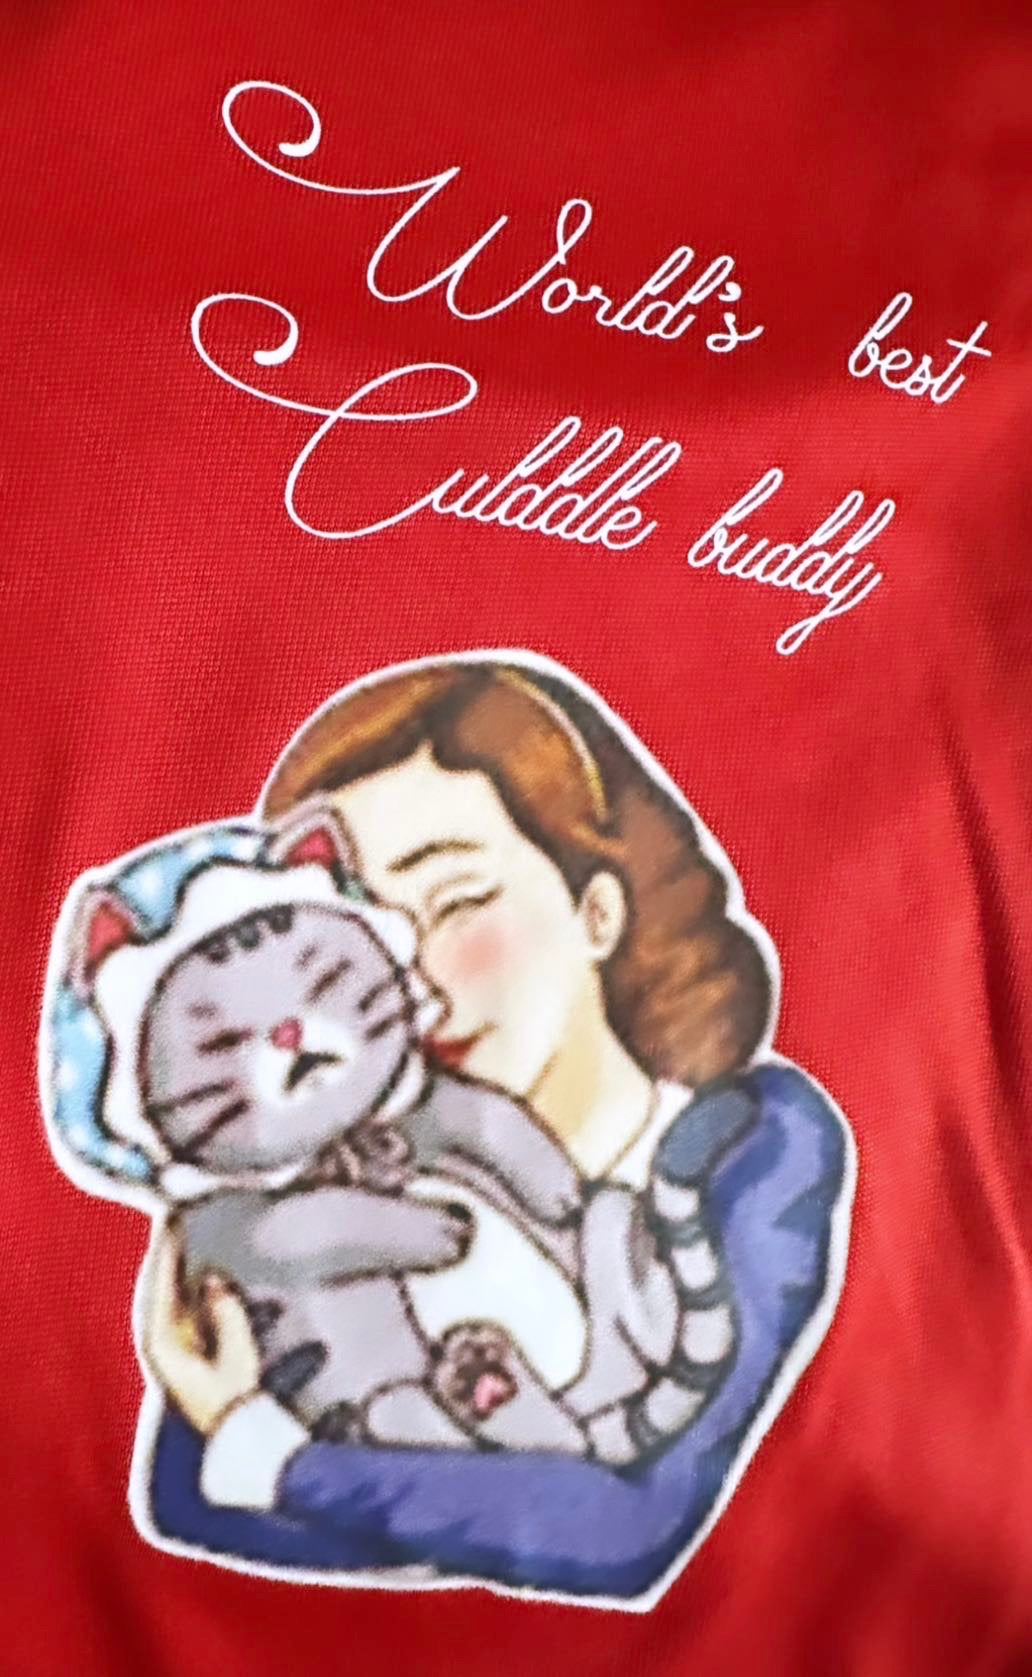 World’s best cuddle buddy Pet shirt